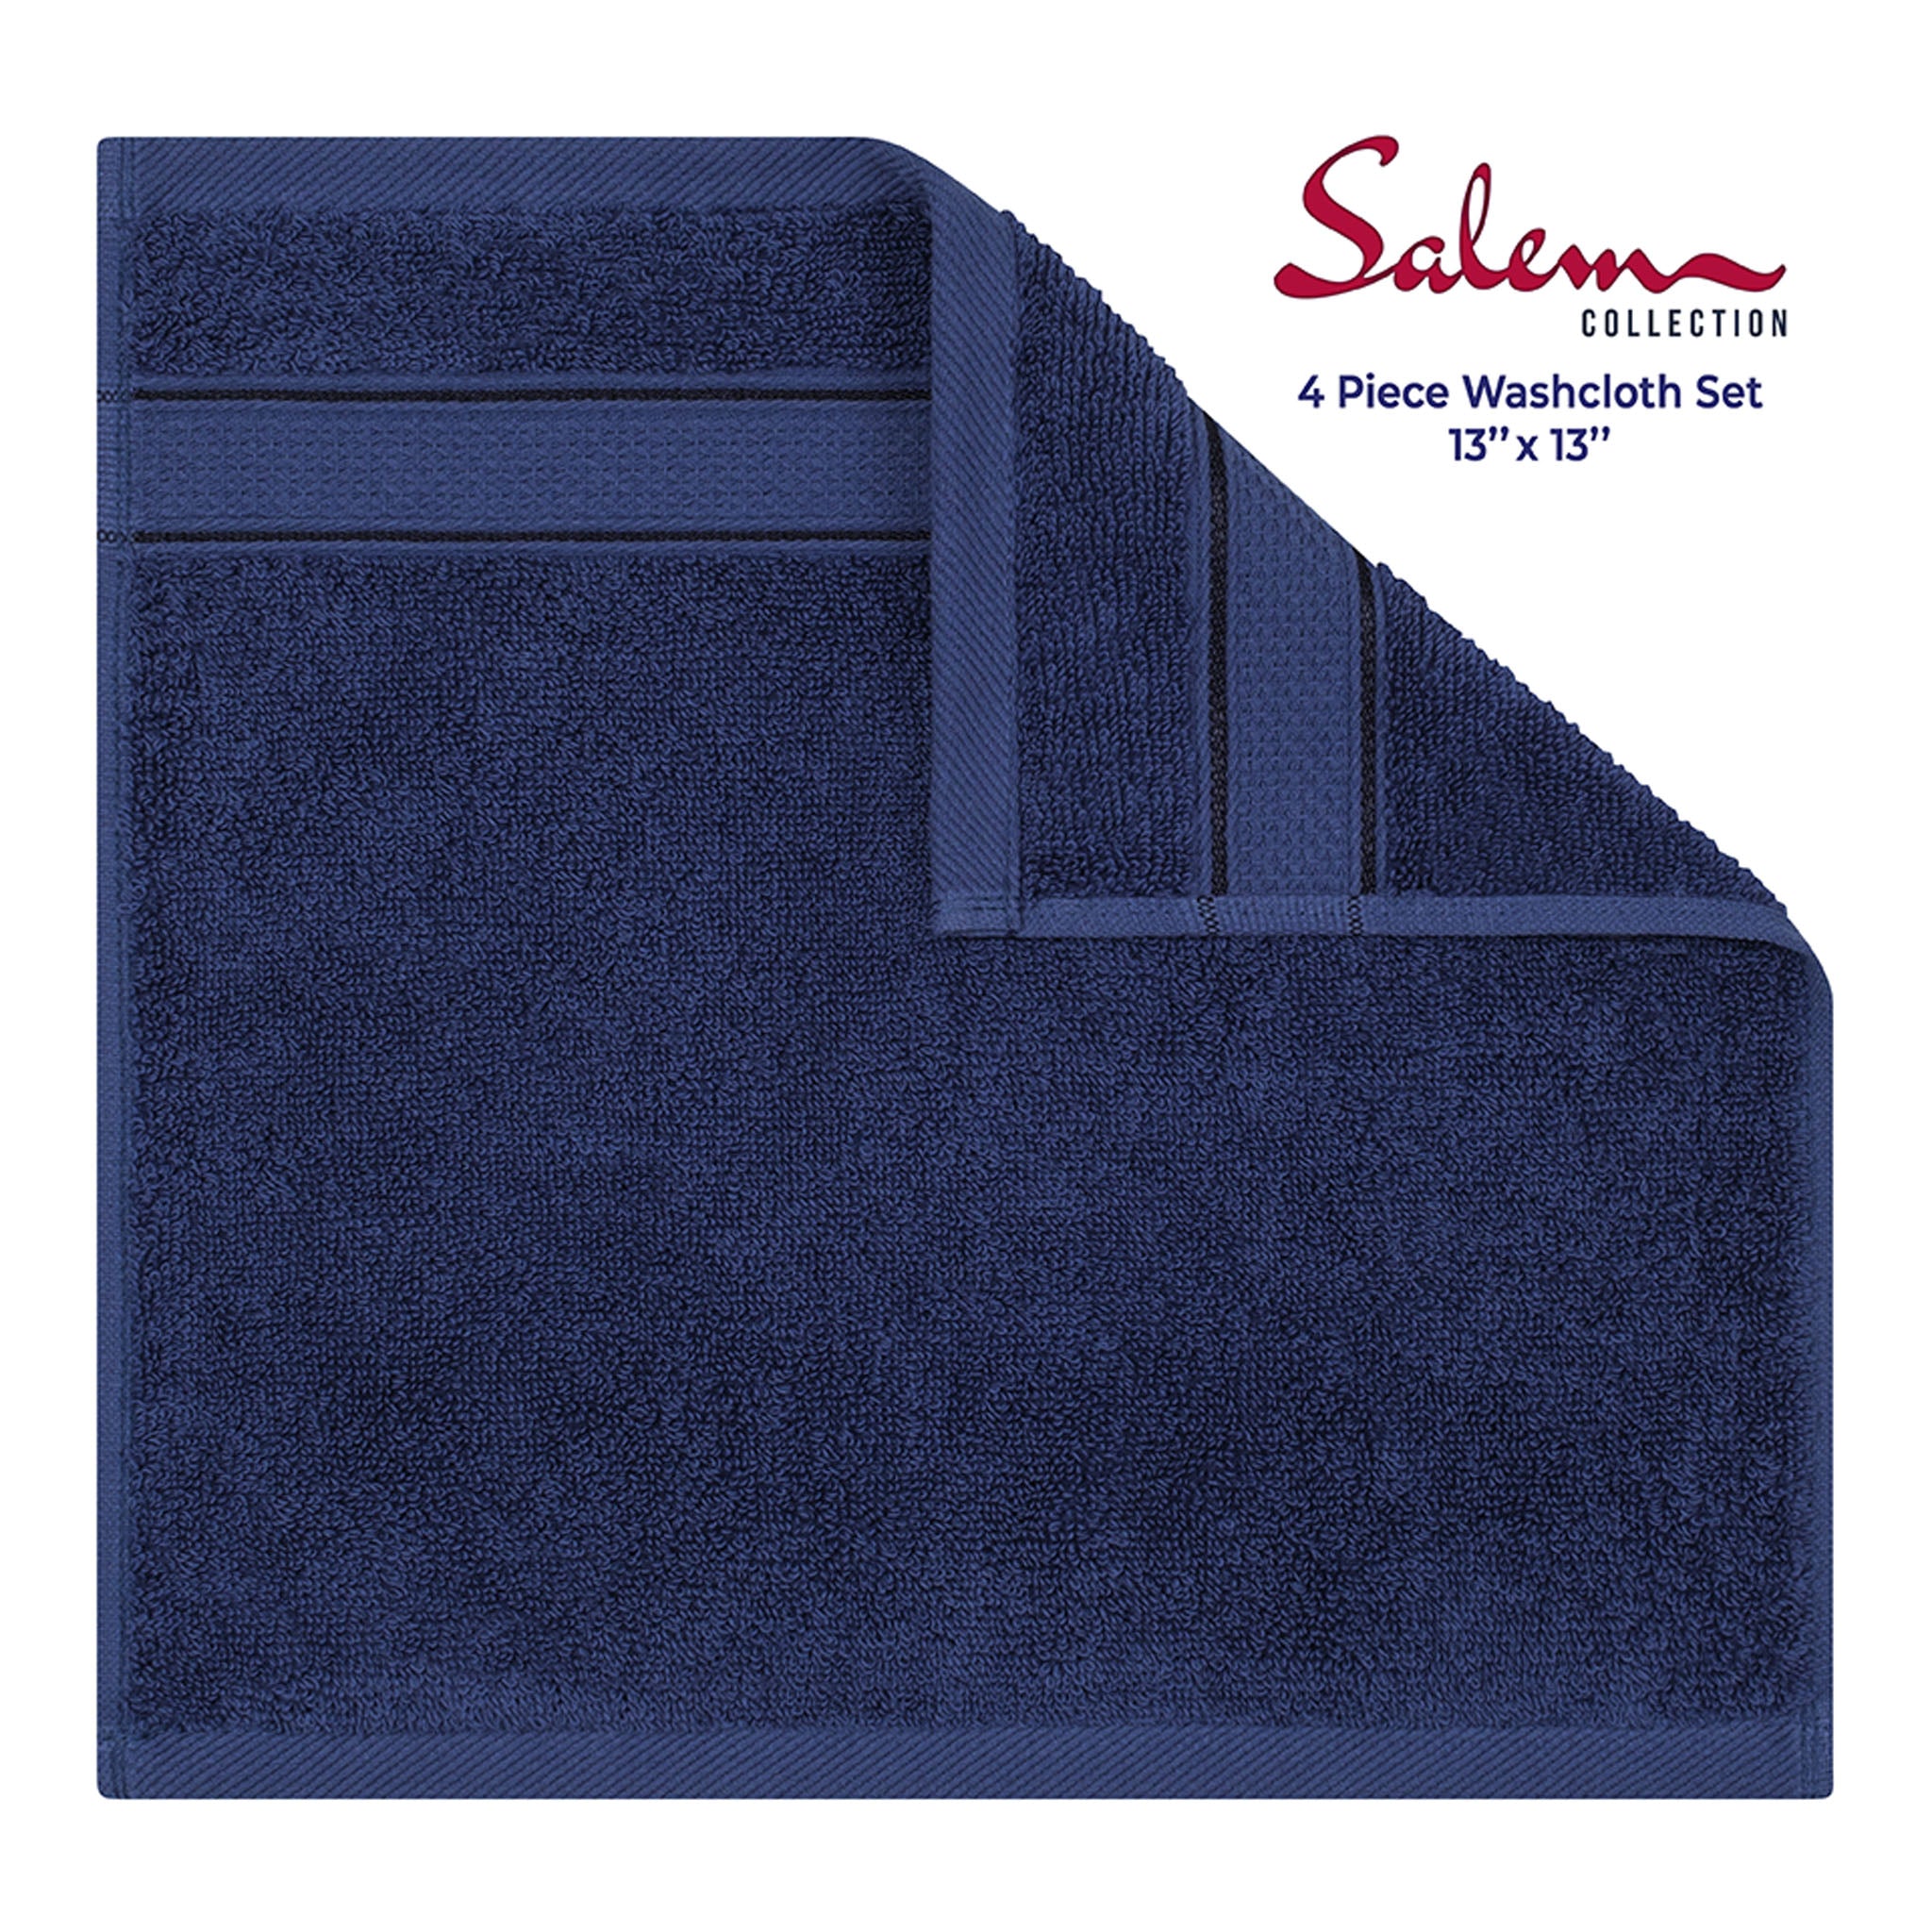 American Soft Linen, 100% Turkish Combed Cotton Luxury, Salem 4 Piece Washcloth Set - 60 Set Case Pack -navy-blue-3